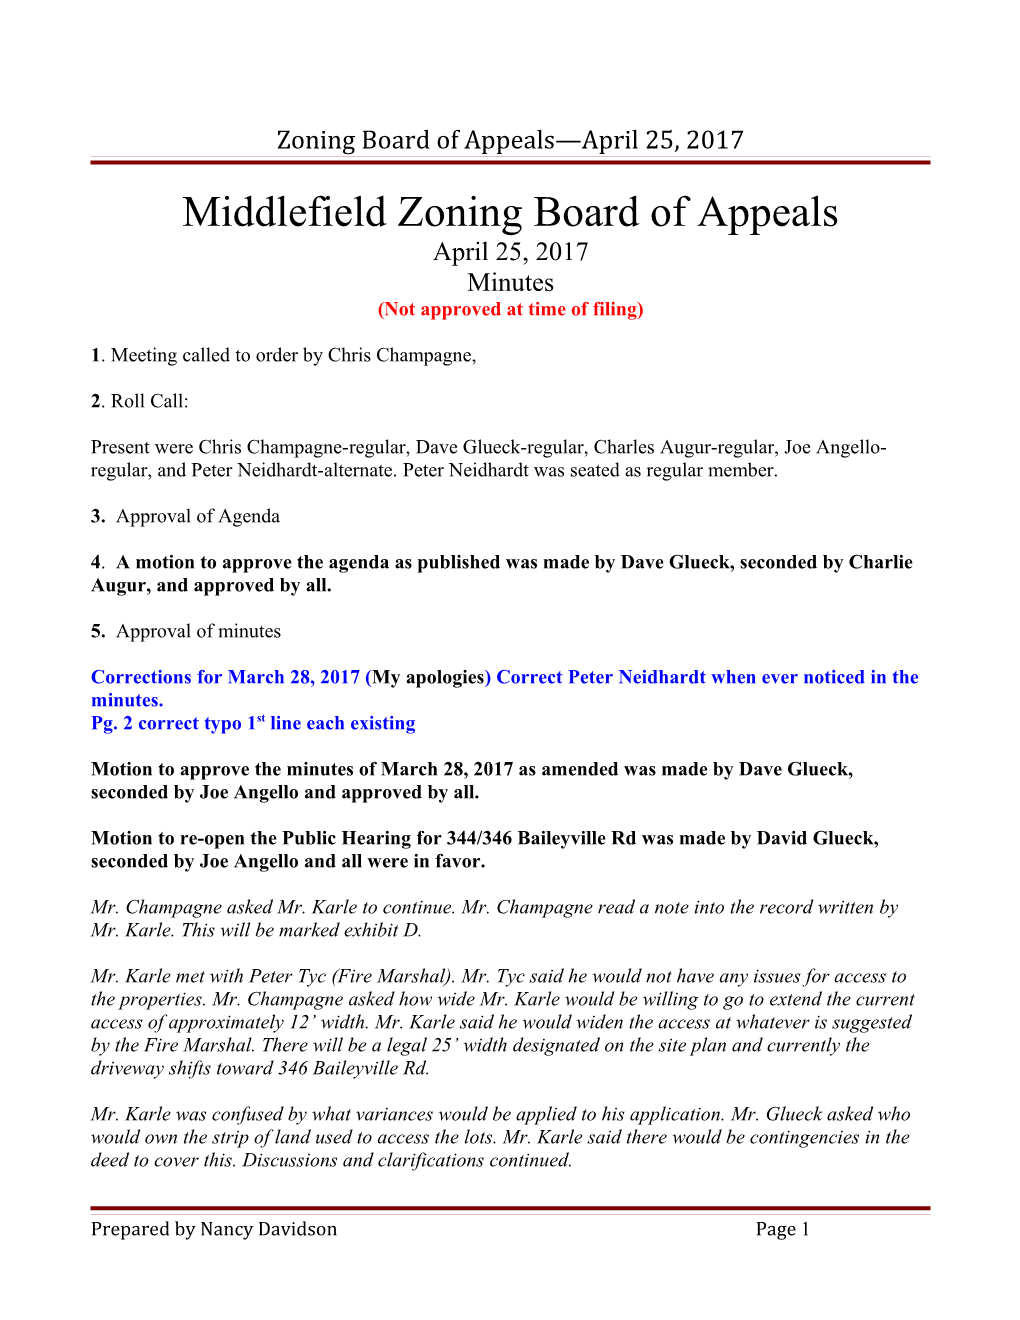 Middlefield Zoning Board of Appeal